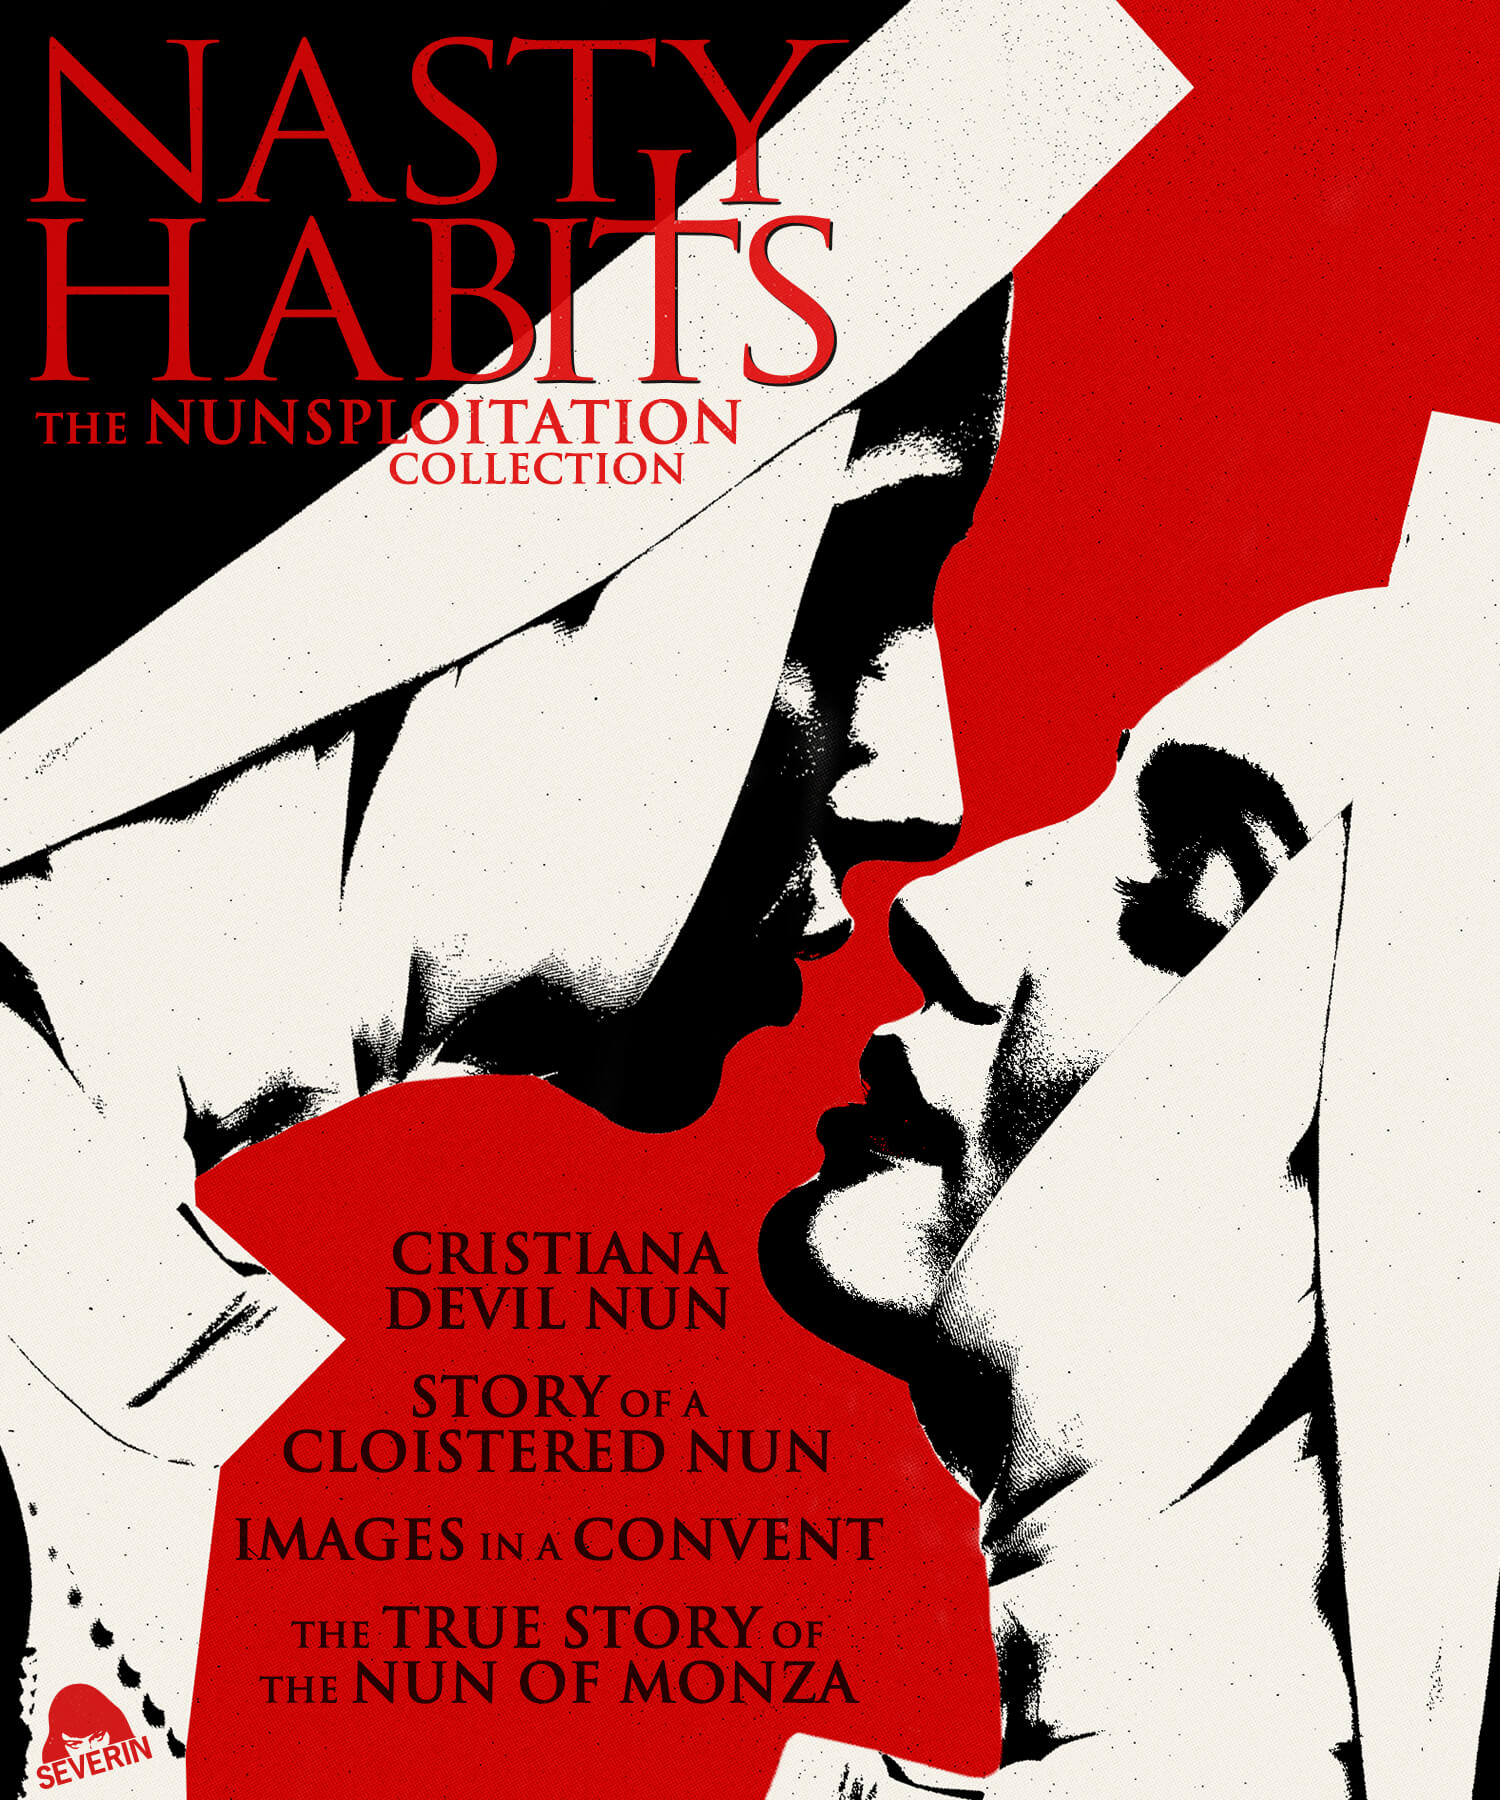 Nasty Habits: The Nunsploitation Collection Blu-Ray Blu-Ray